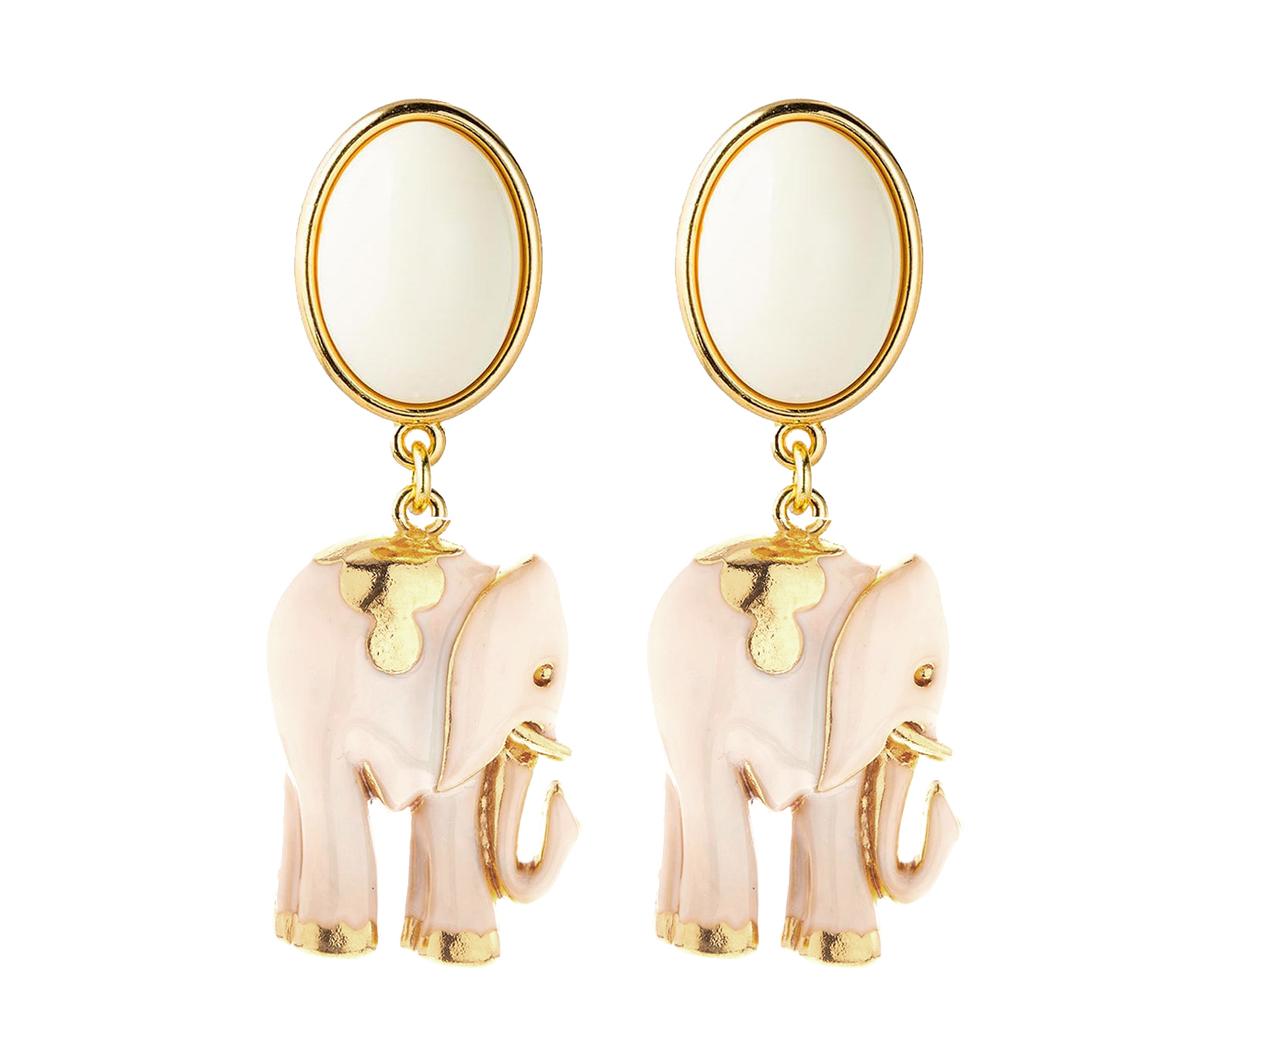 Ohrstecker oval - mit in justwin transparent-beige cremeweiß Elefant